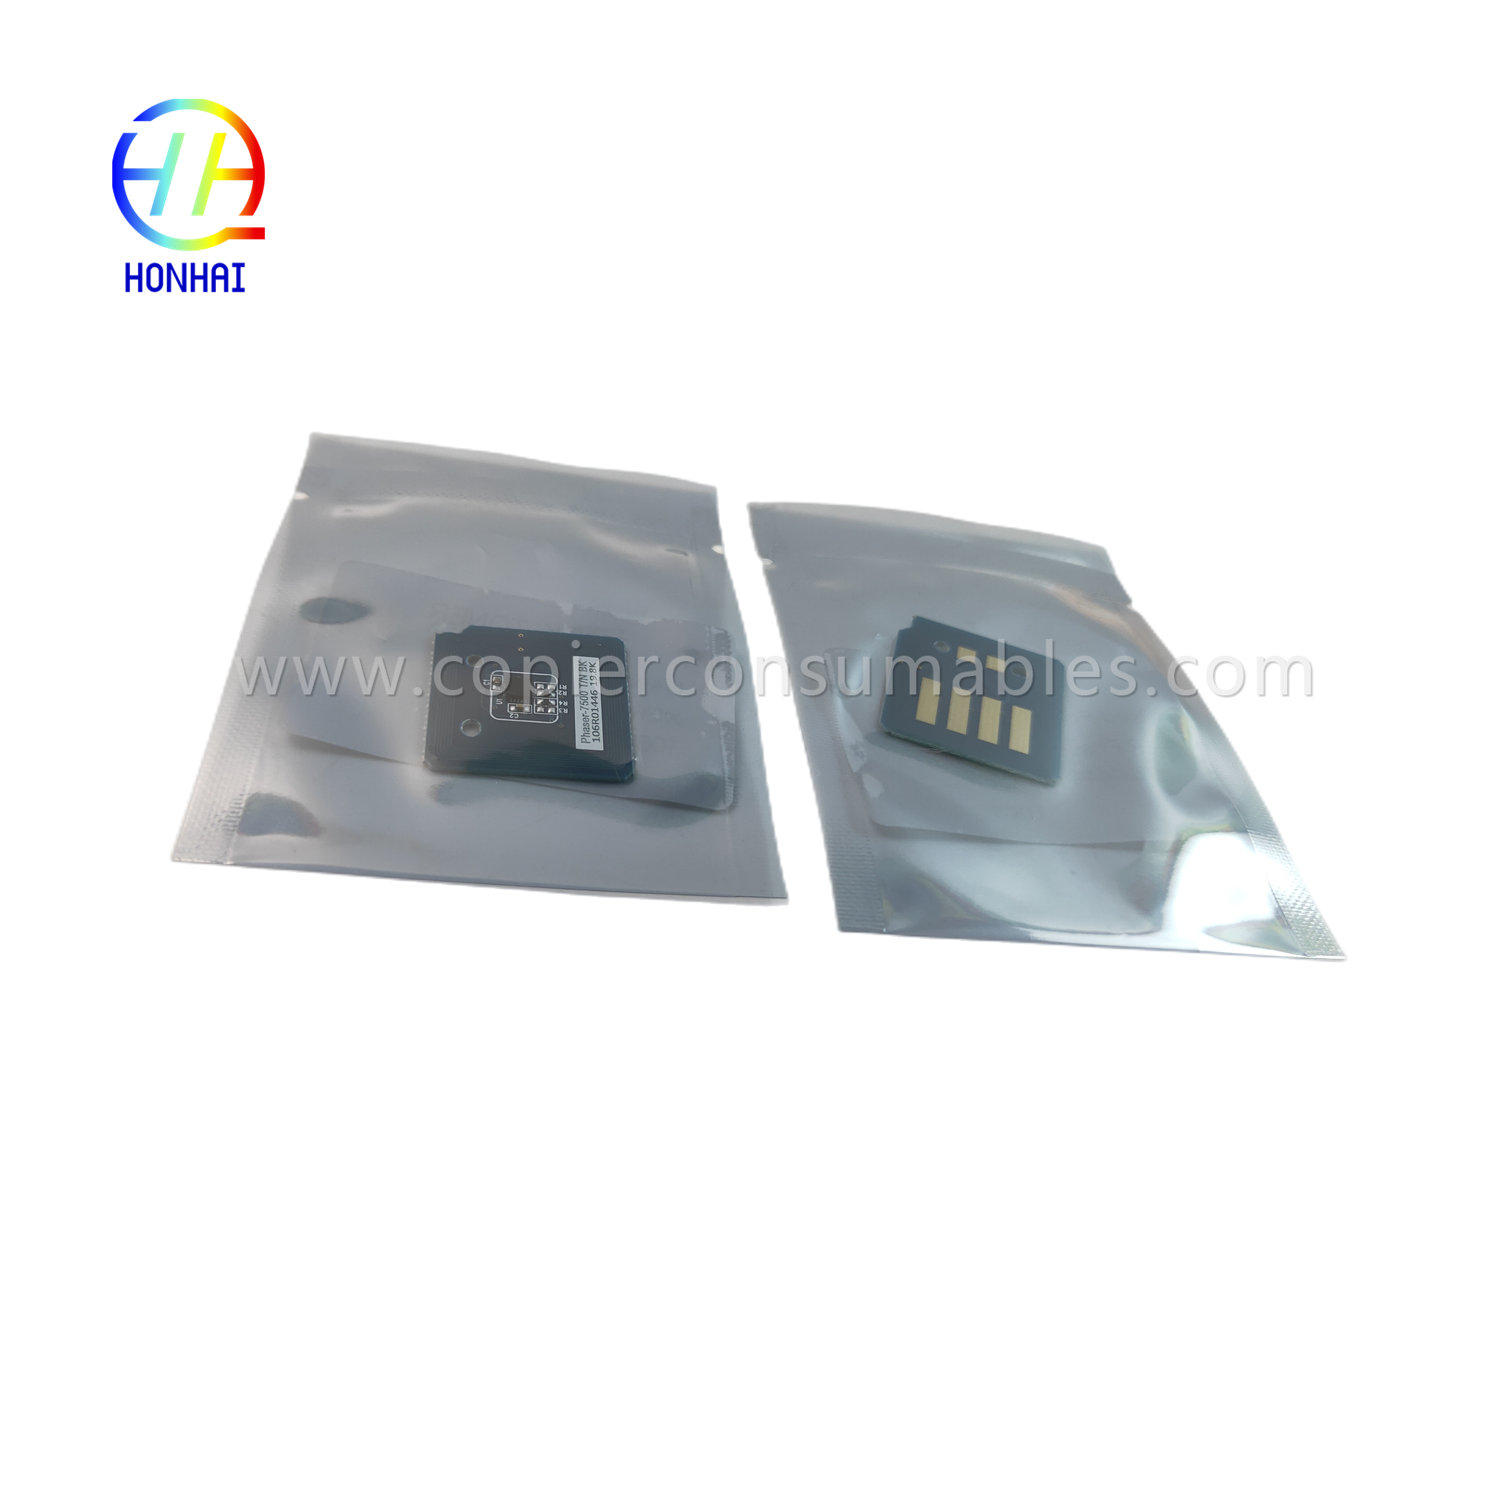 https://c585.goodao.net/toner-cartridge-chip-for-xerox-7500-7500n-7500dn-7500dt-106r01444-106r01446-toner-chip-product/